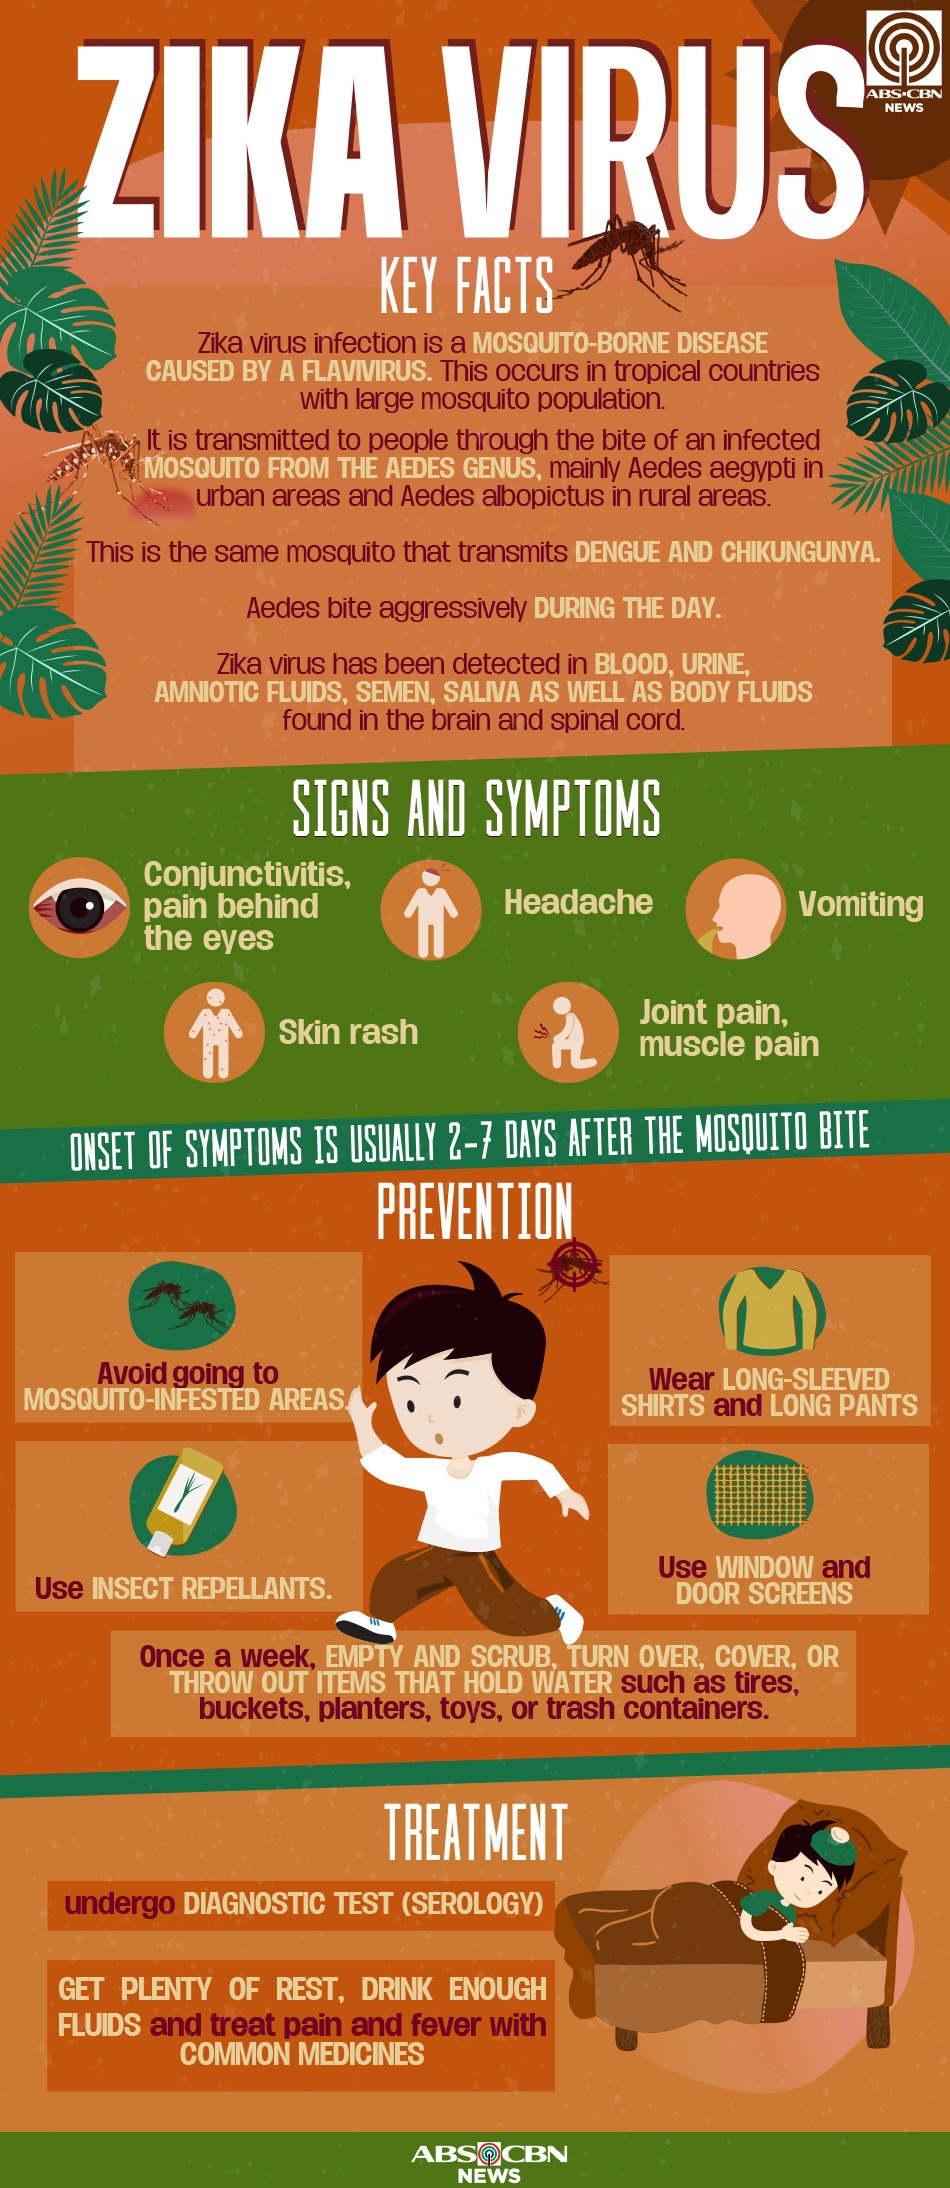 Zika virus: Key facts 3